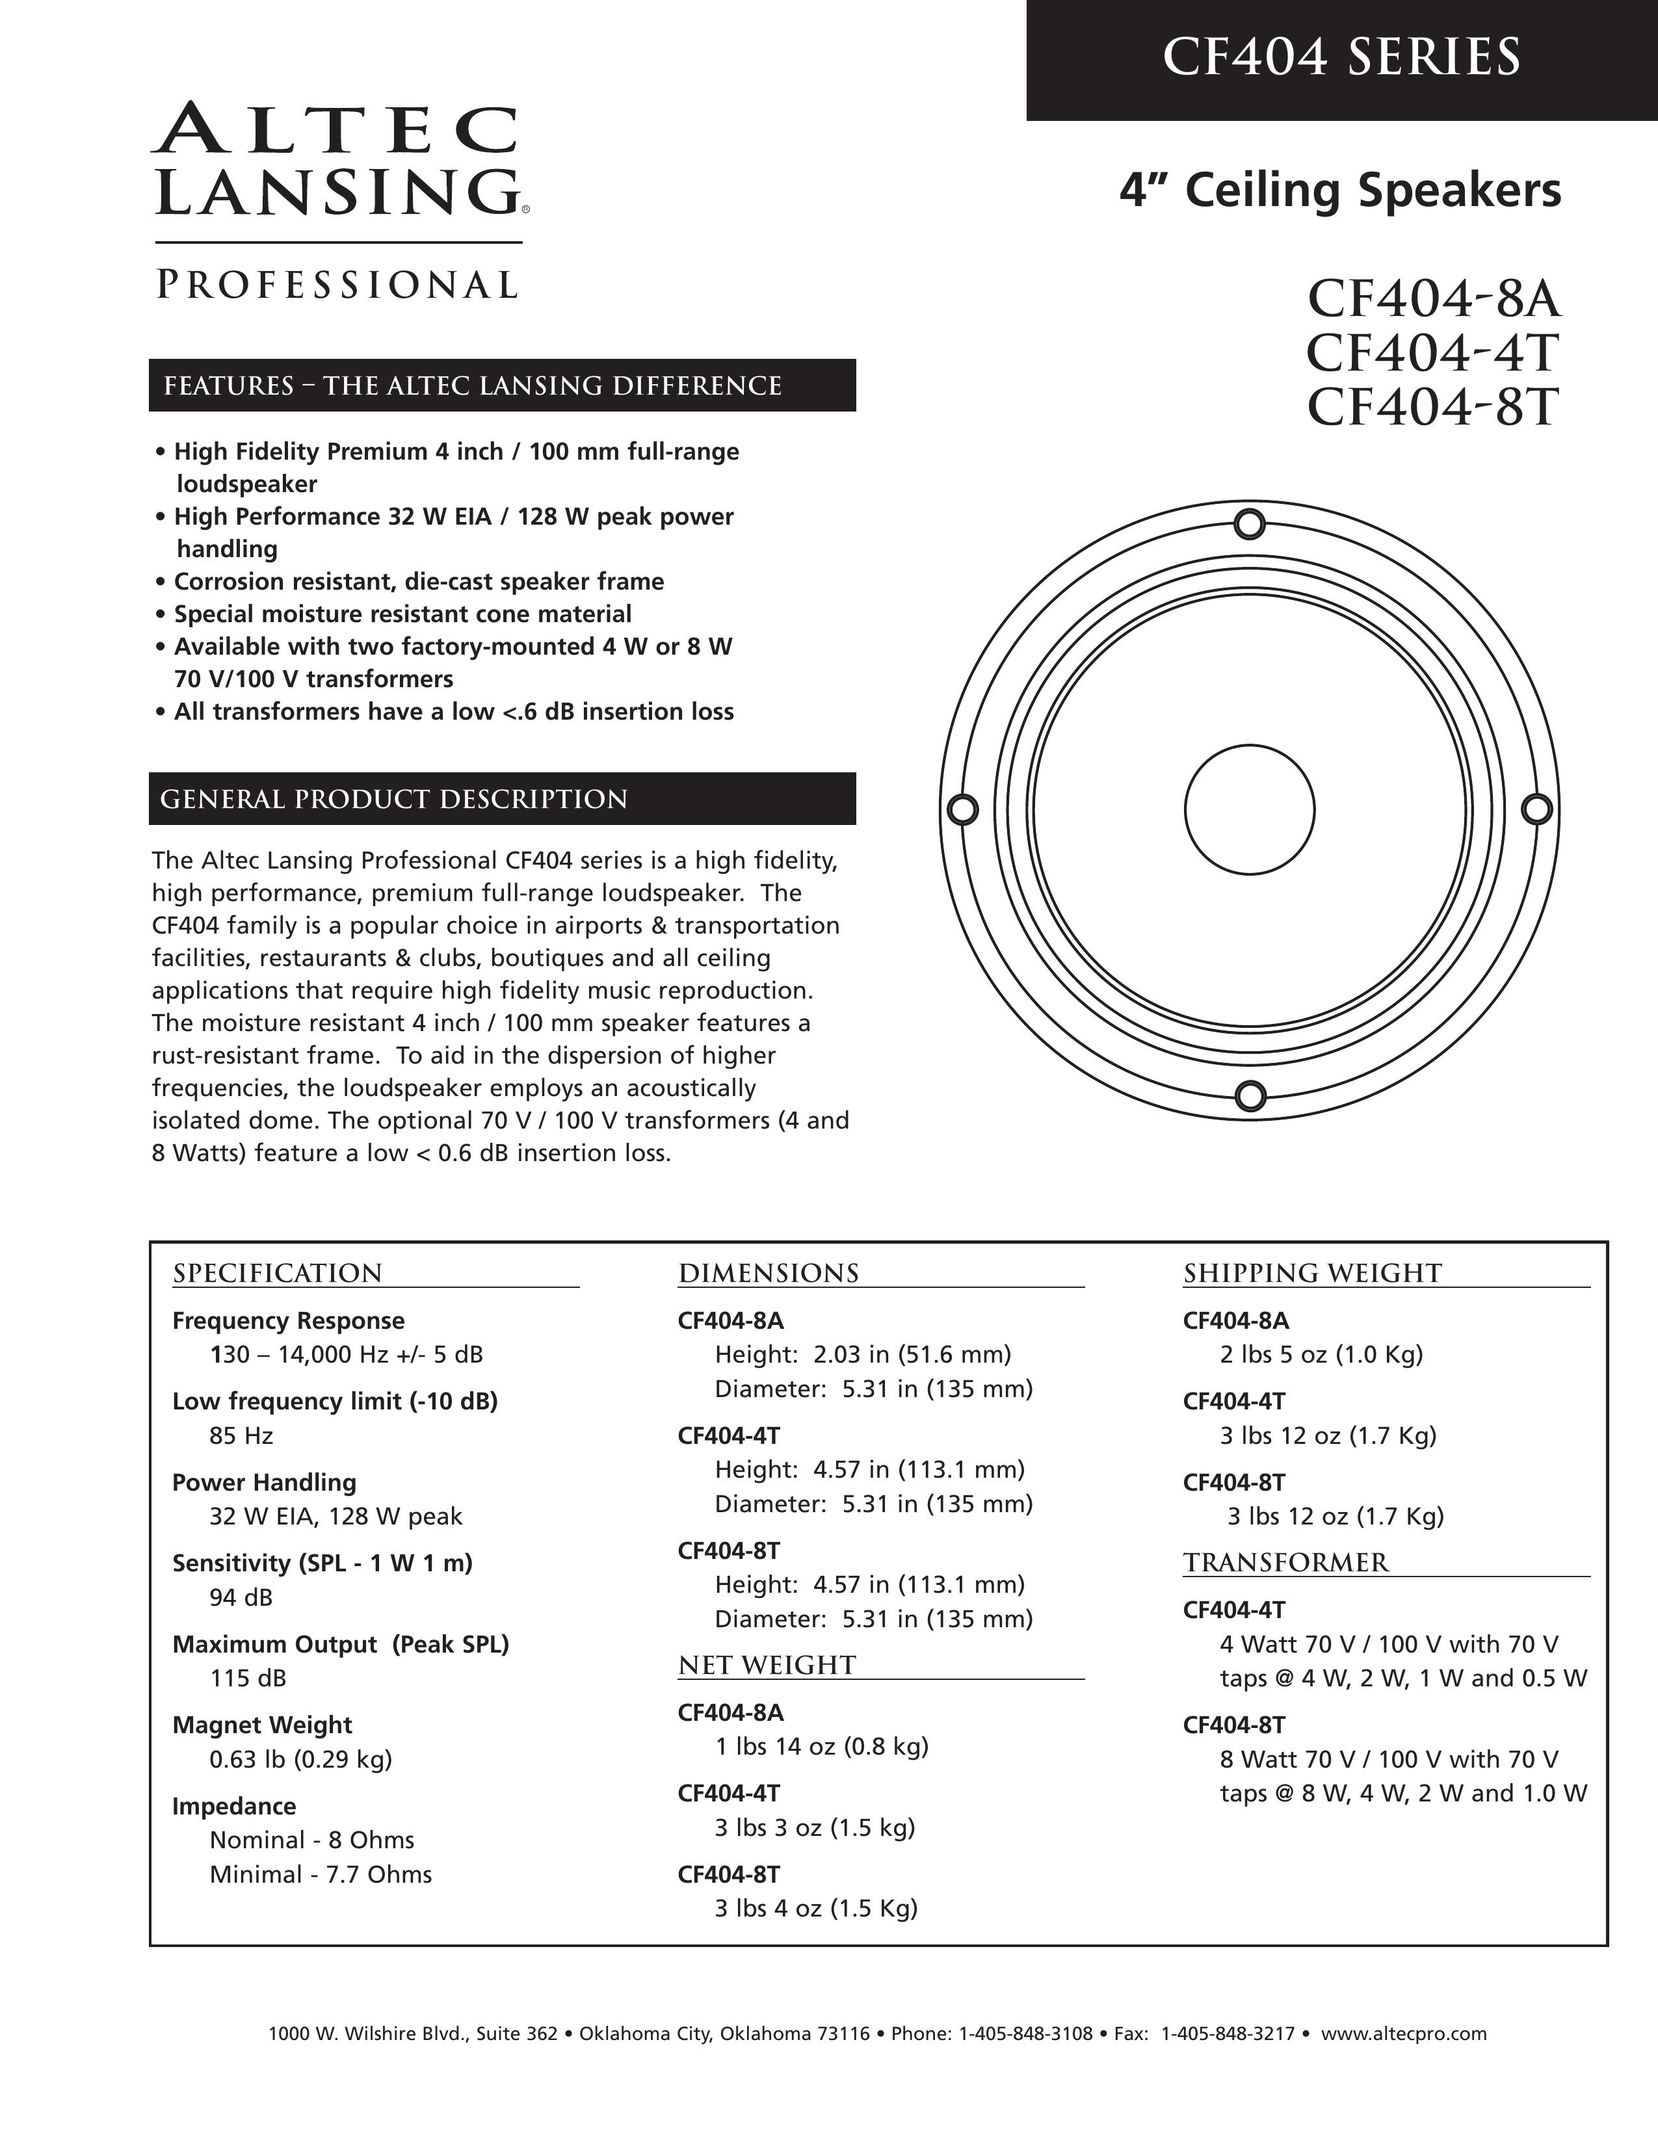 Altec Lansing CF404-4T Speaker User Manual